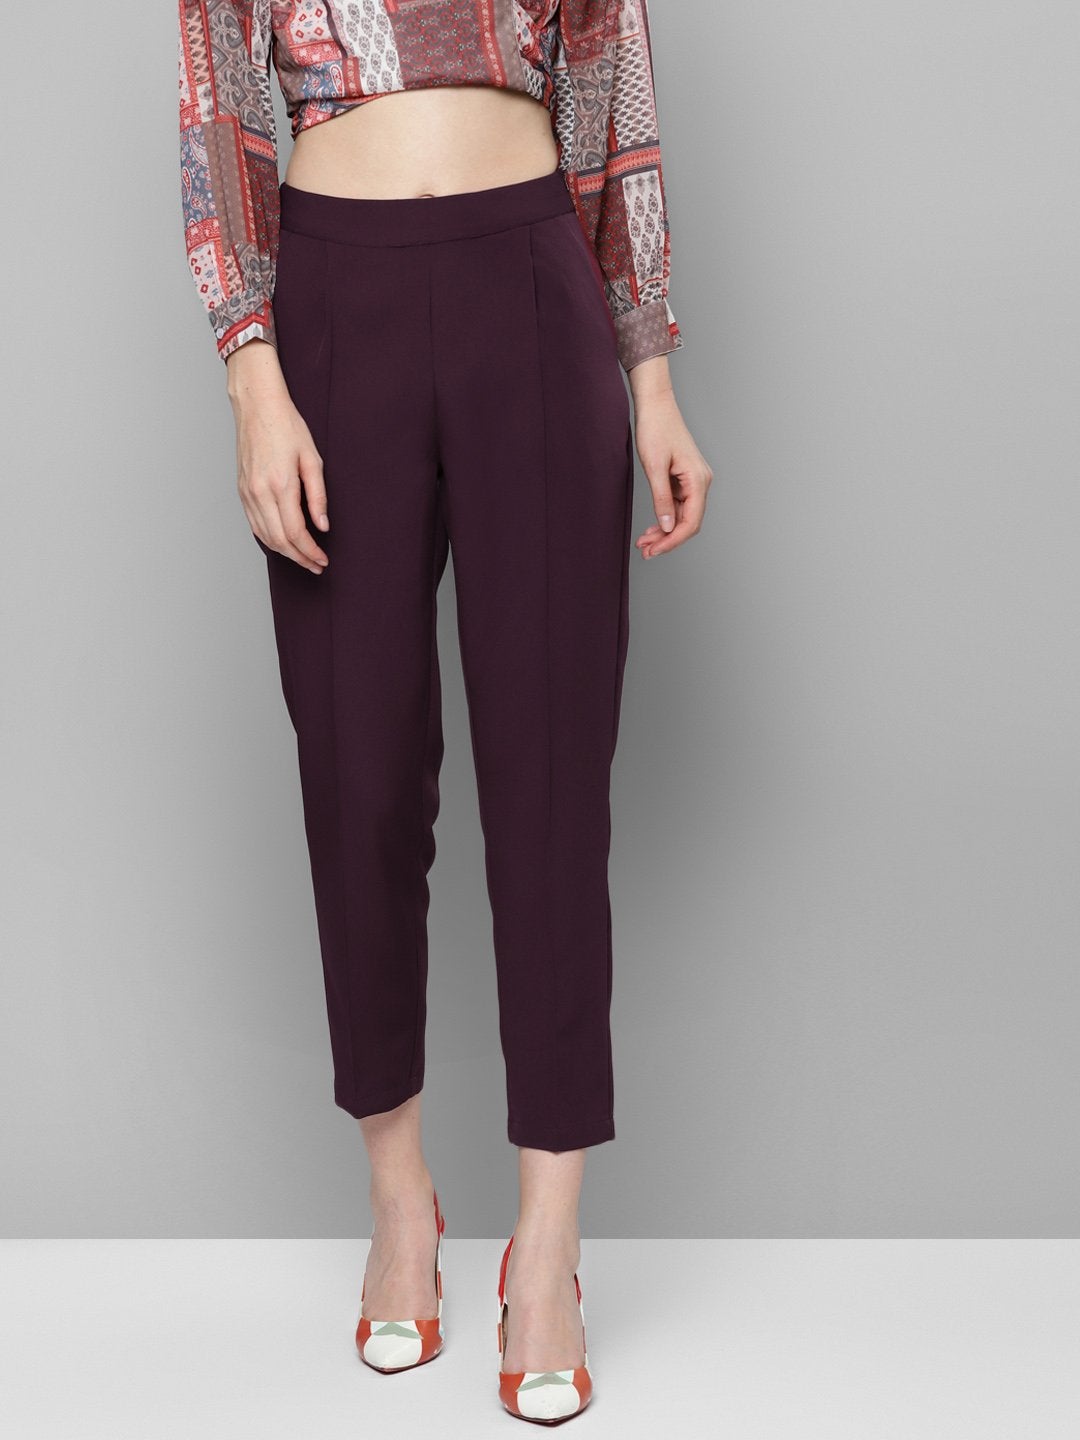 Women's Burgundy Tailored Fit Pants - SASSAFRAS